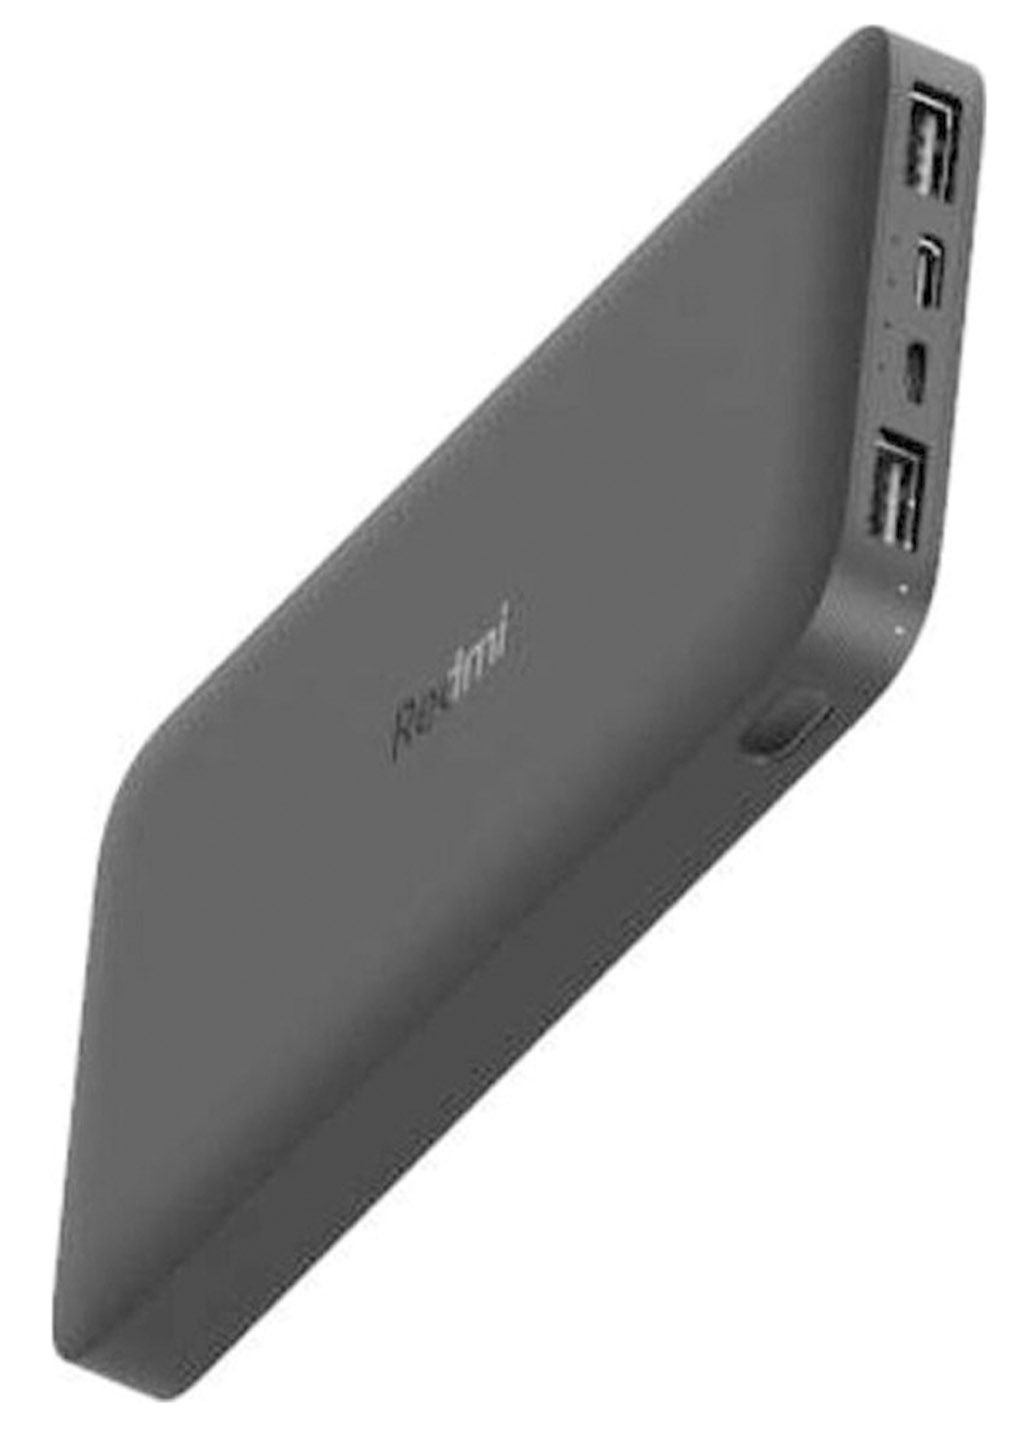 УМБ Power Bank 10000 mAh micro-USB Type-C Xiaomi redmi (280852480)